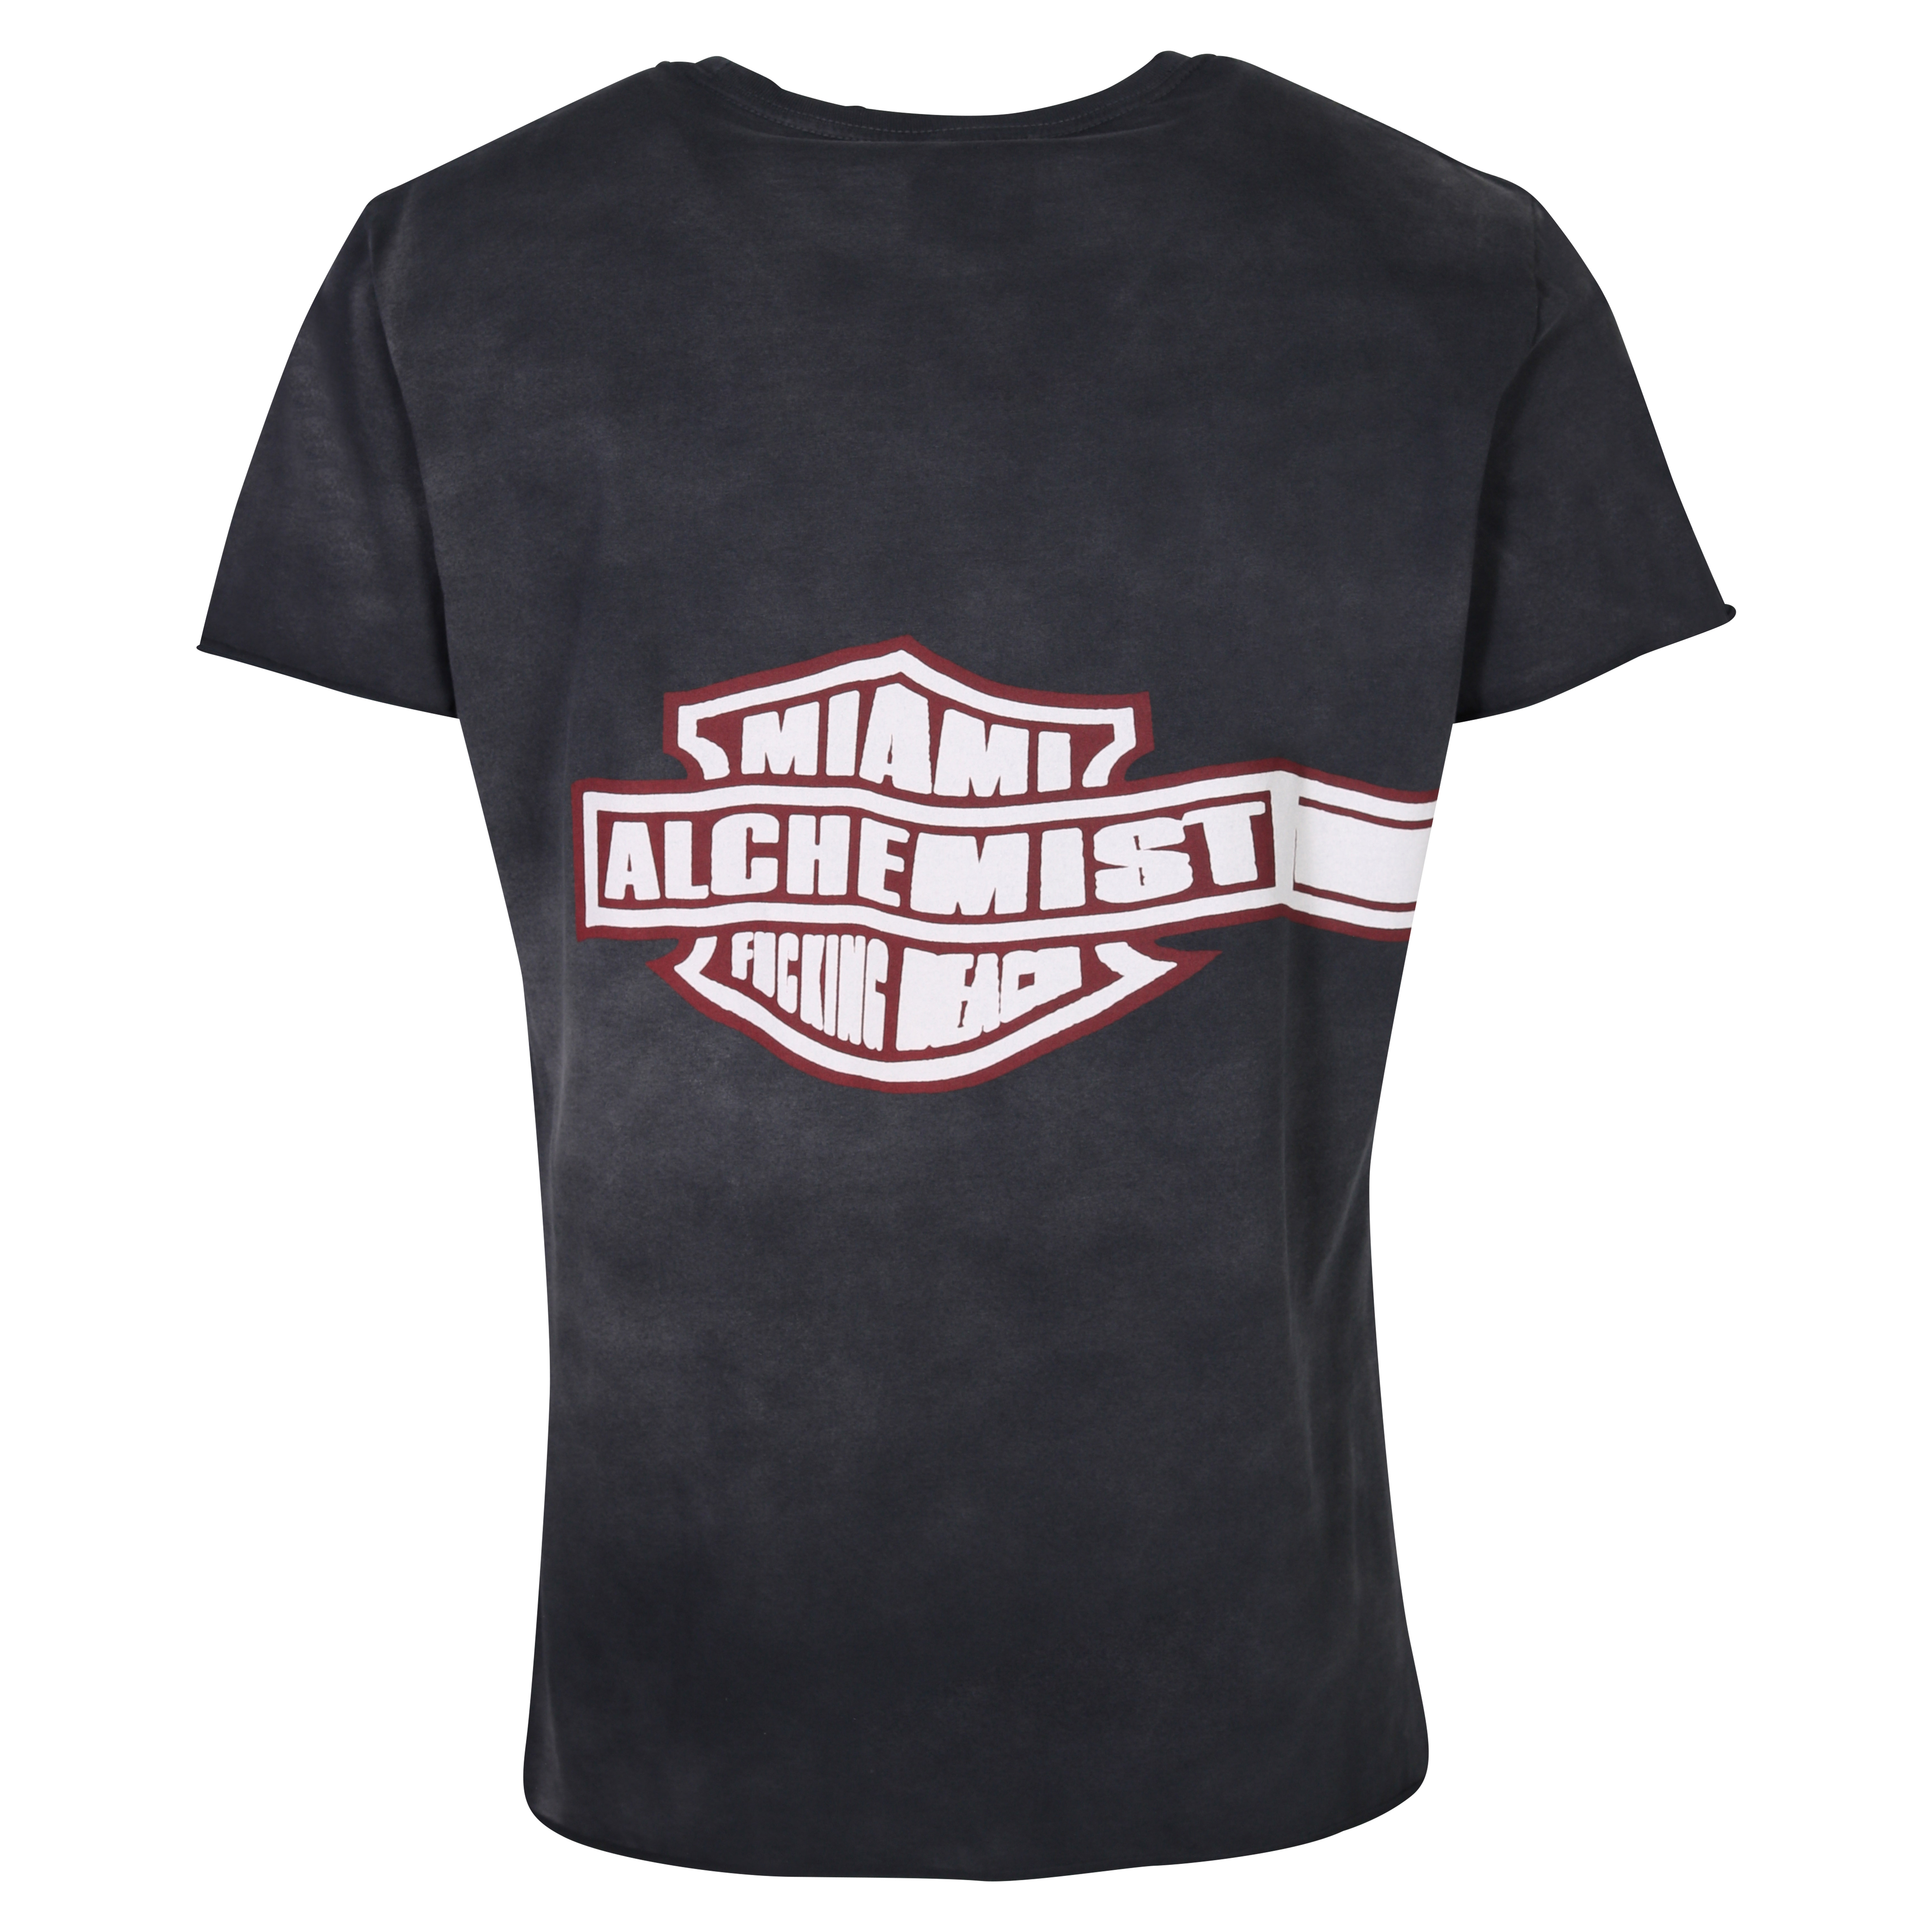 Unisex Alchemist Logan T-Shirt in Vintage Black L